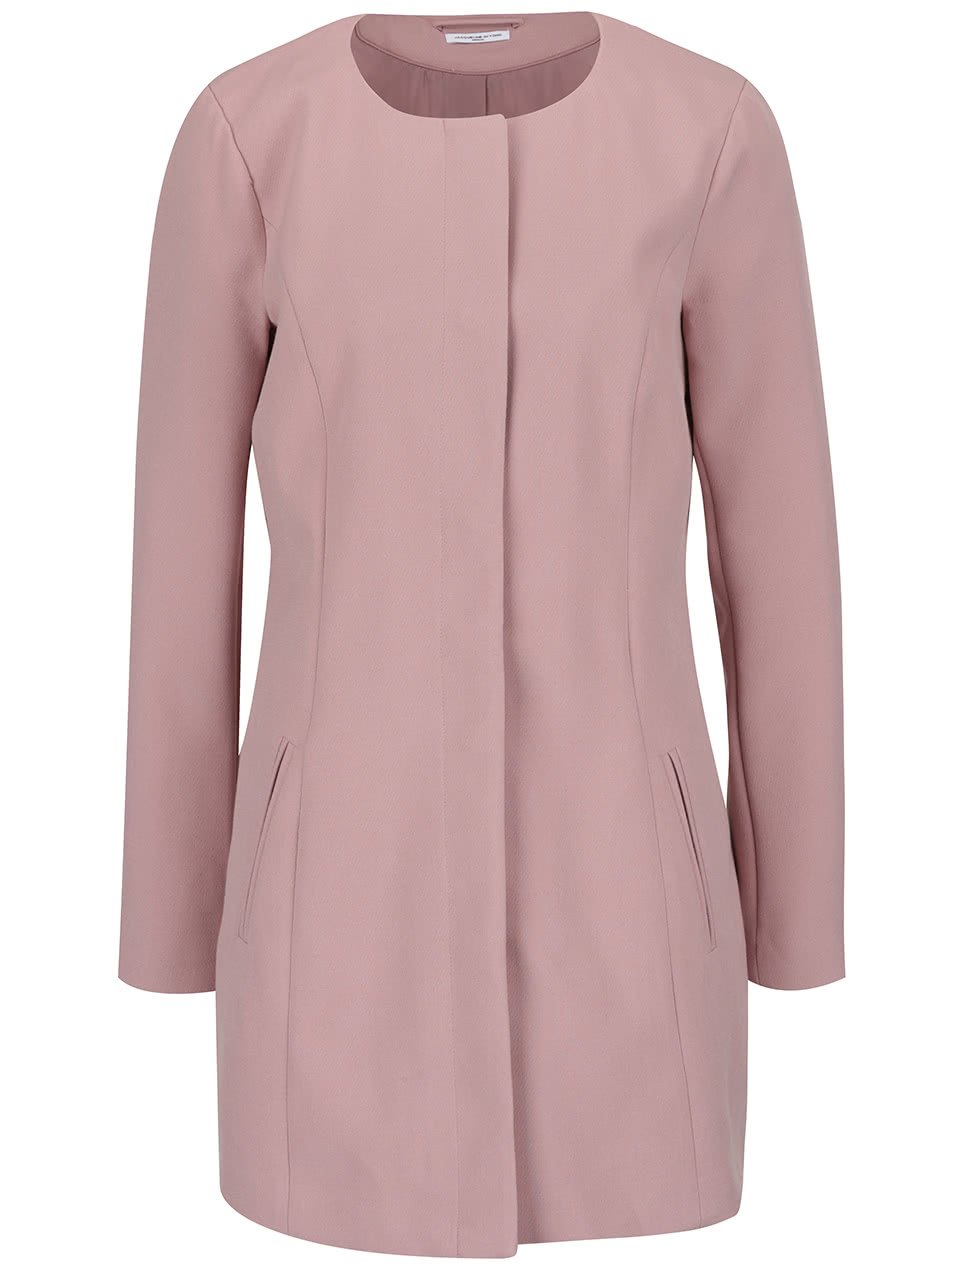 Růžový kabát Jacqueline de Yong New Brighton